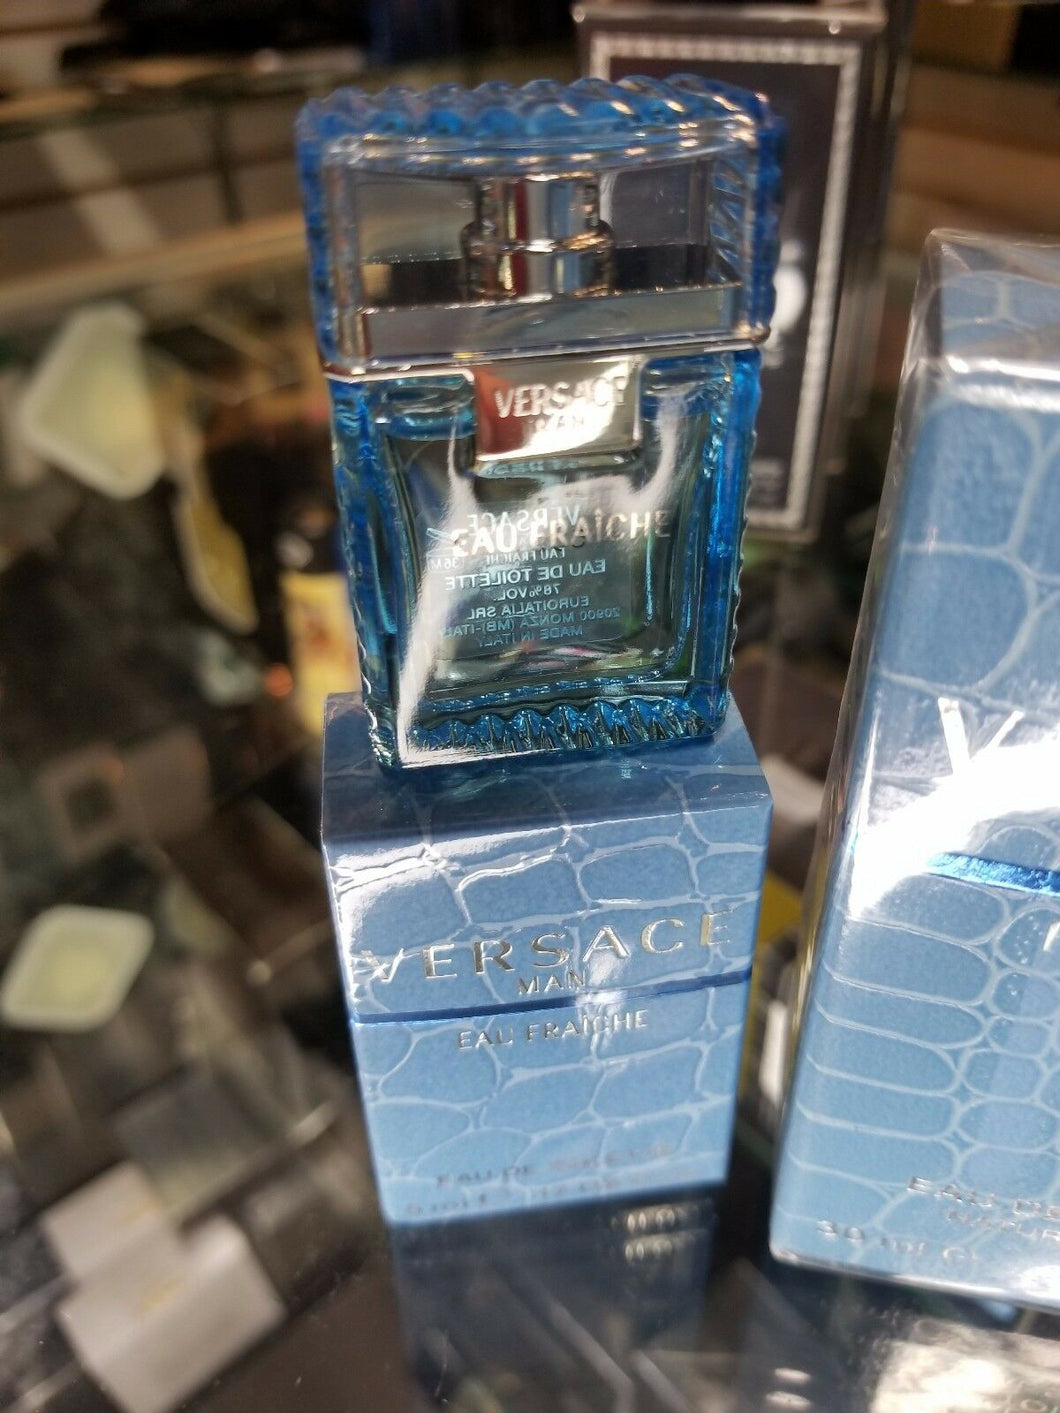 Versace Man EAU FRAICHE Gianni Versace .17 1 1.7 3.4 oz EDT Spray for Men SEALED - Perfume Gallery